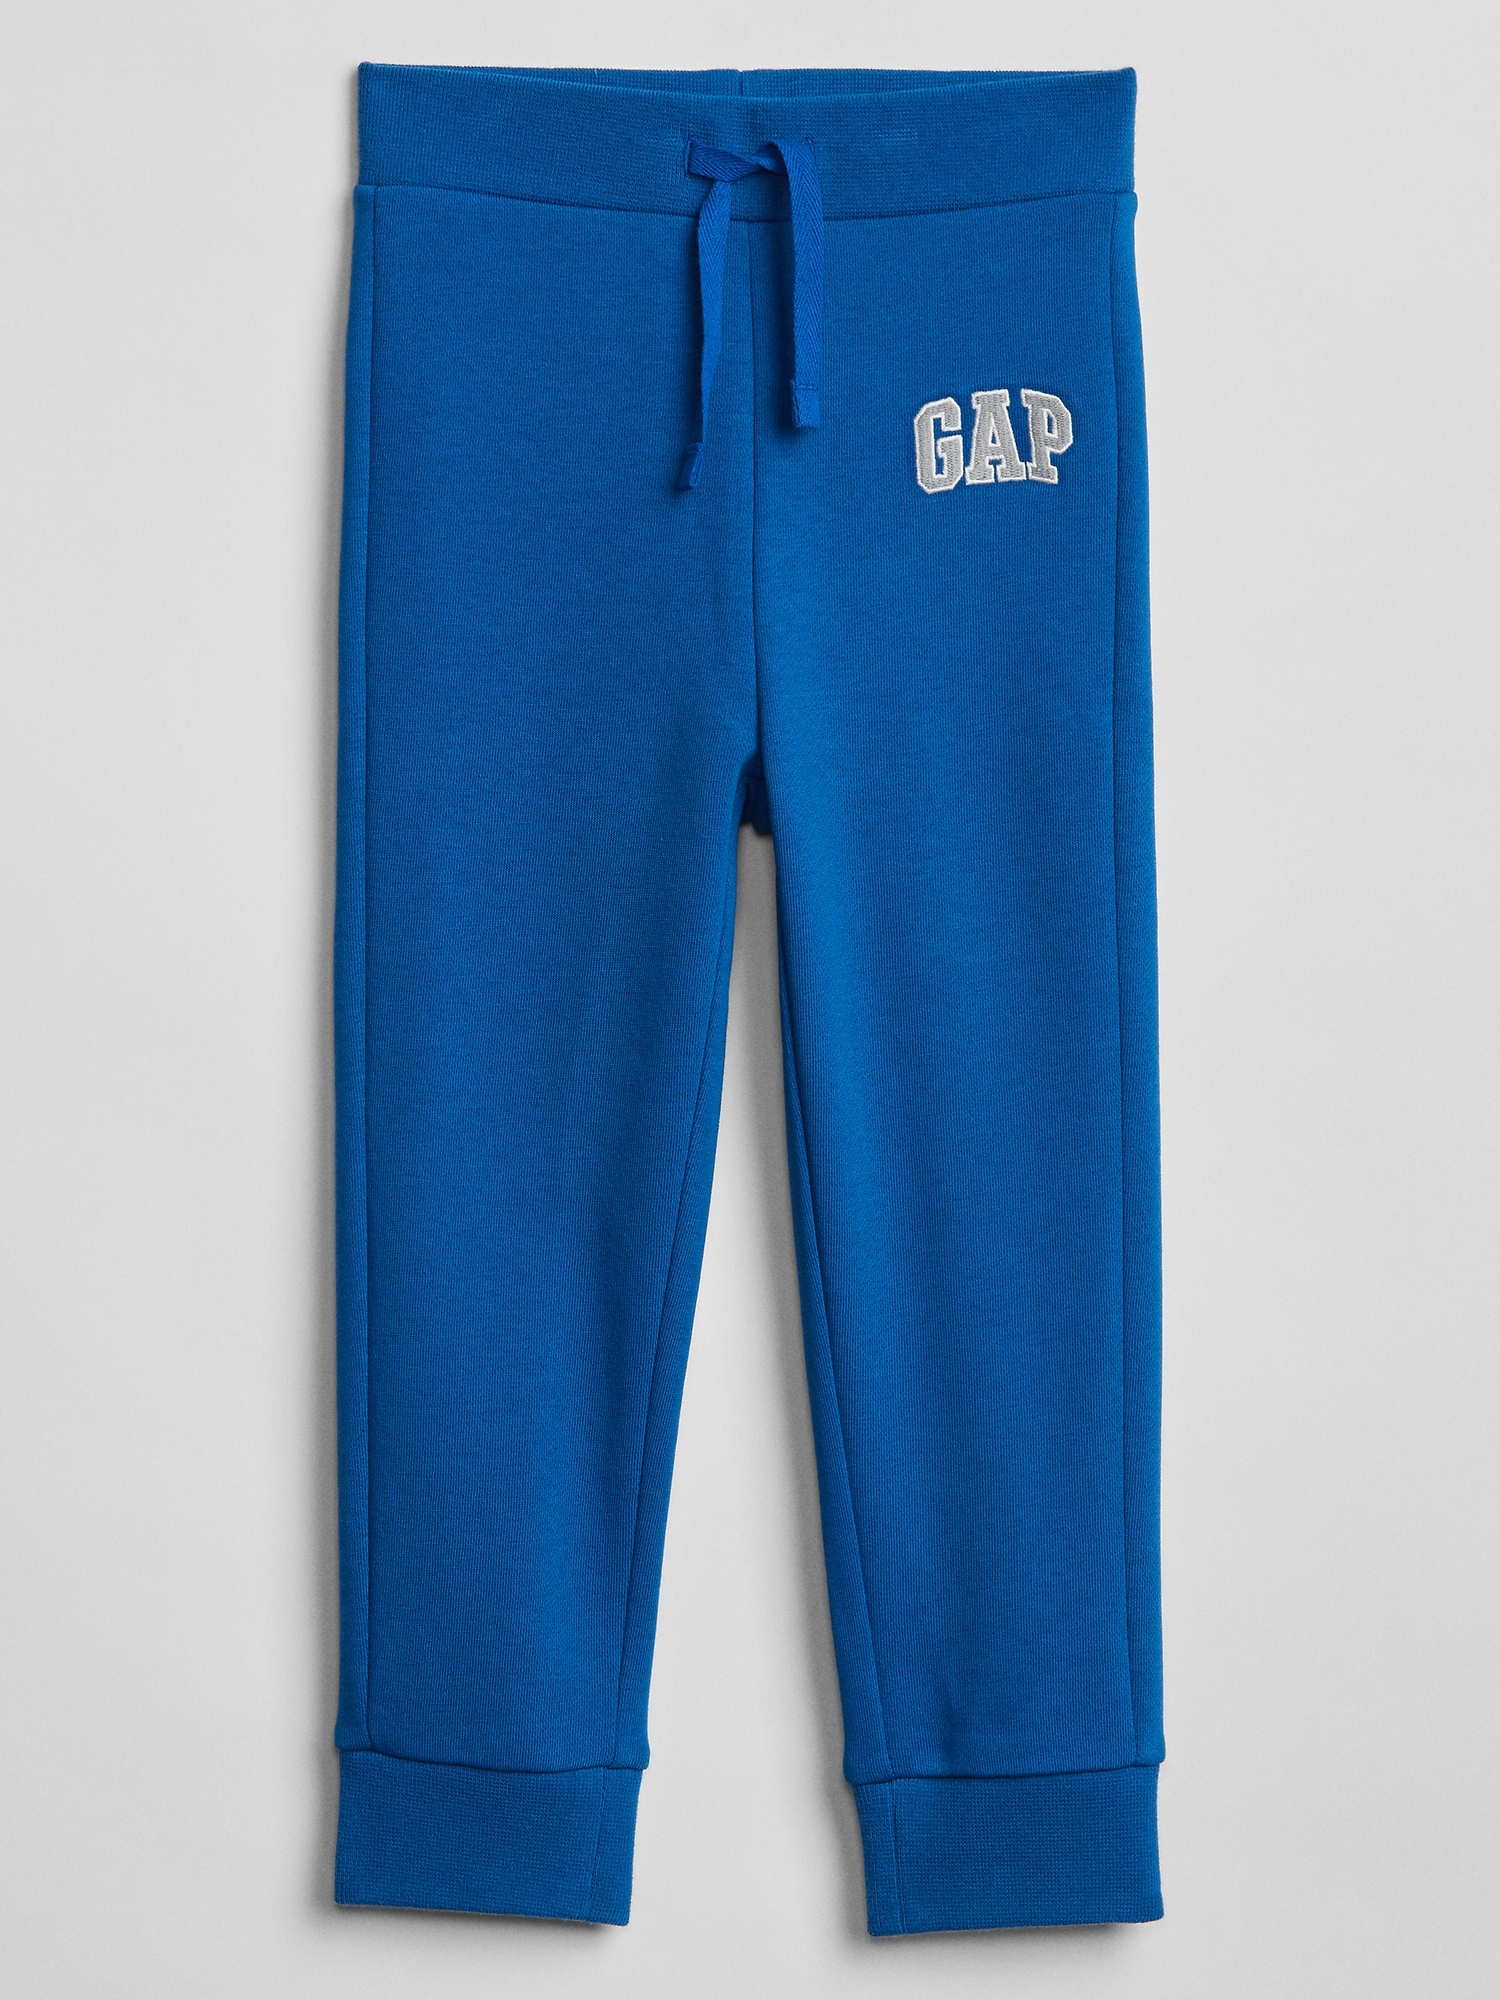 gap blue pants